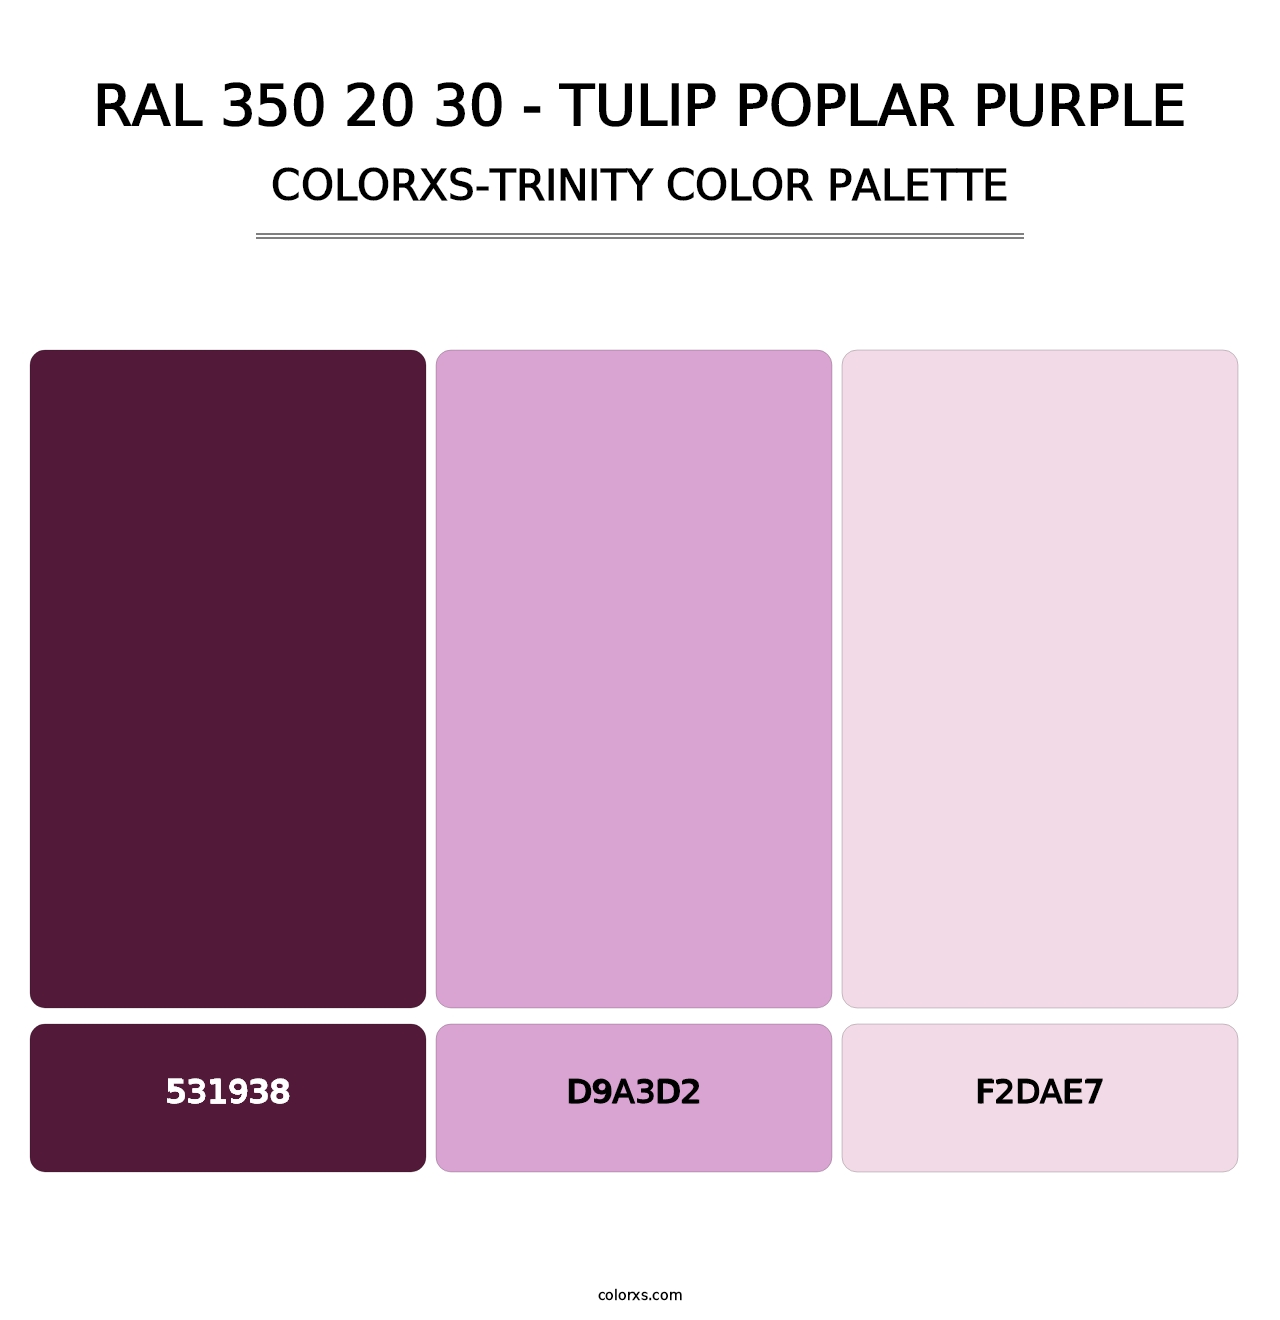 RAL 350 20 30 - Tulip Poplar Purple - Colorxs Trinity Palette